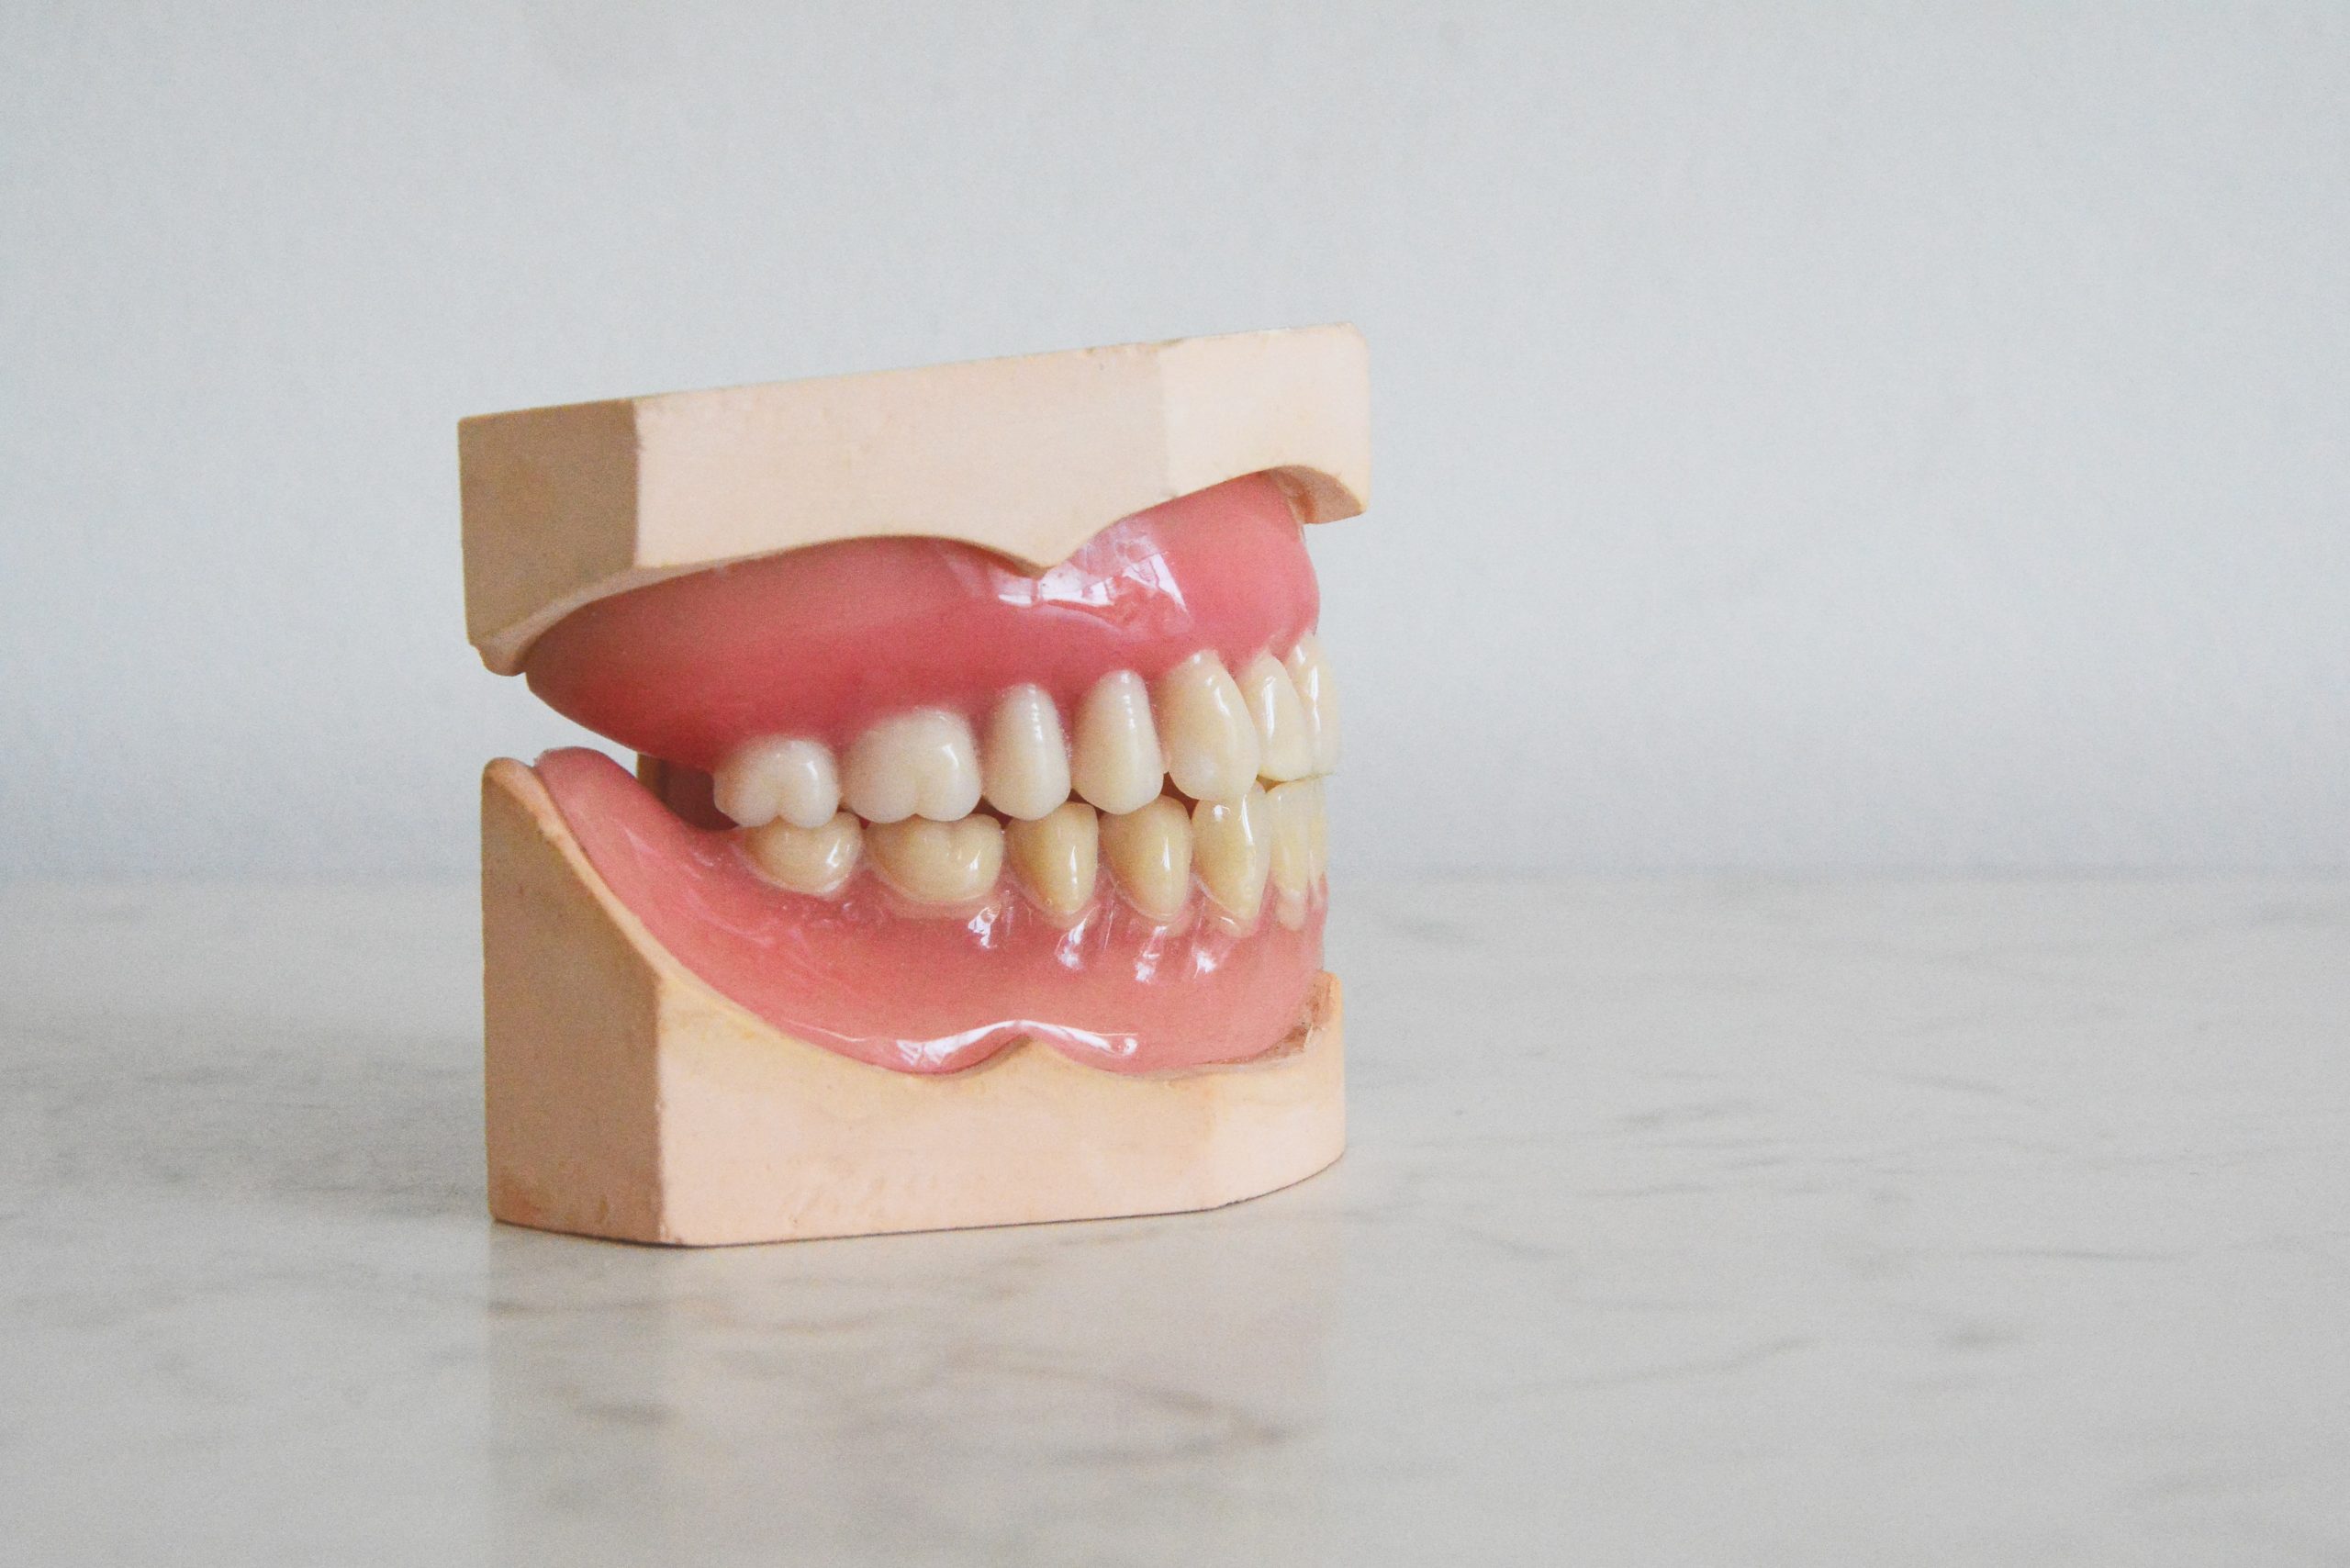 gyvenimas su dantų protezais